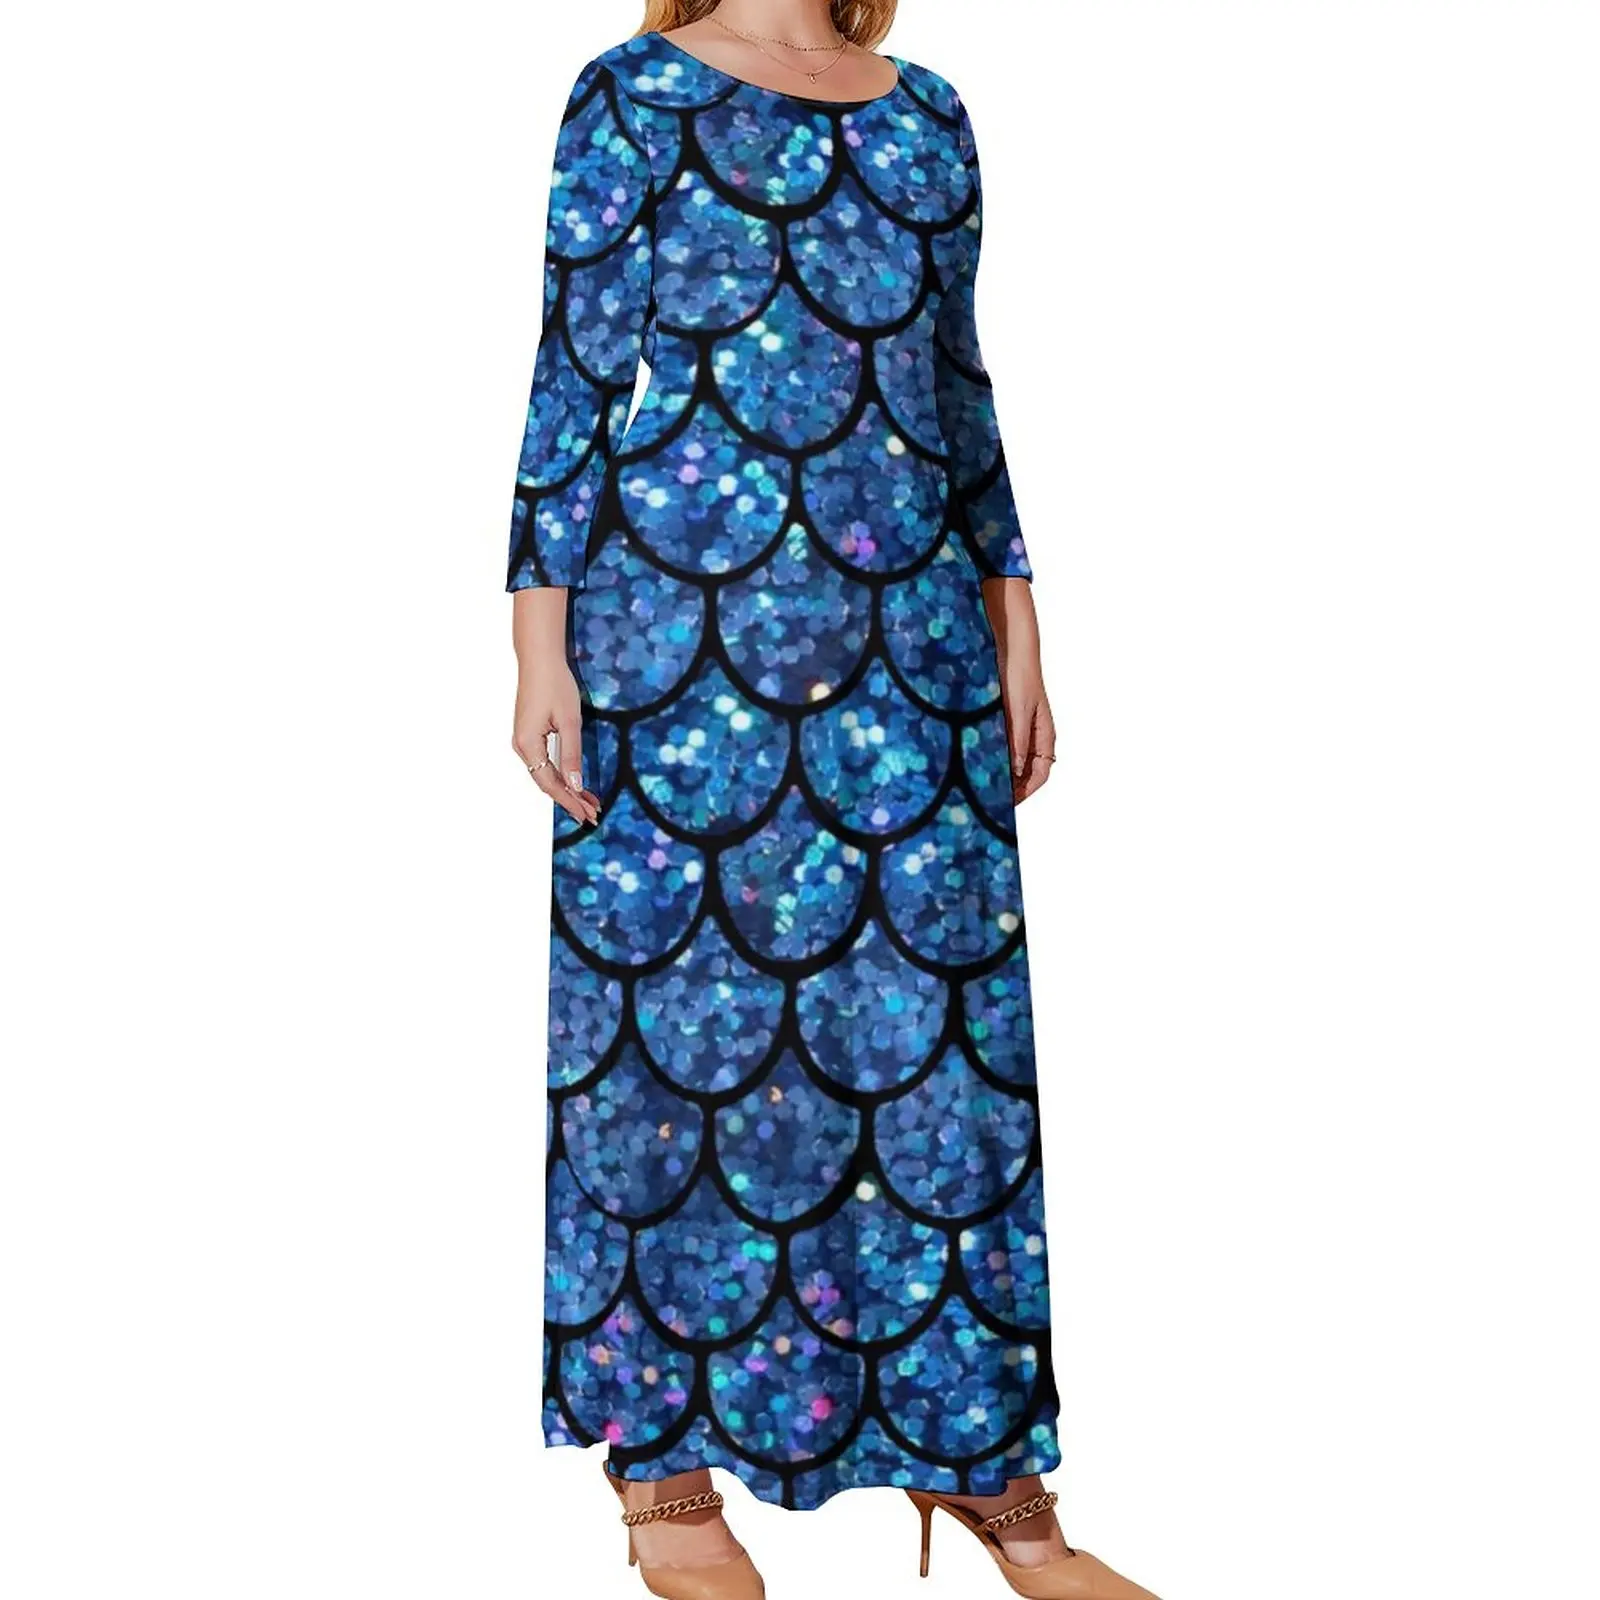 Sparkly Mermaid Scales Dress Blue Glitter Animal Skin Aesthetic Bohemia Dresses Elegant Maxi Dress Autumn Plus Size Clothing